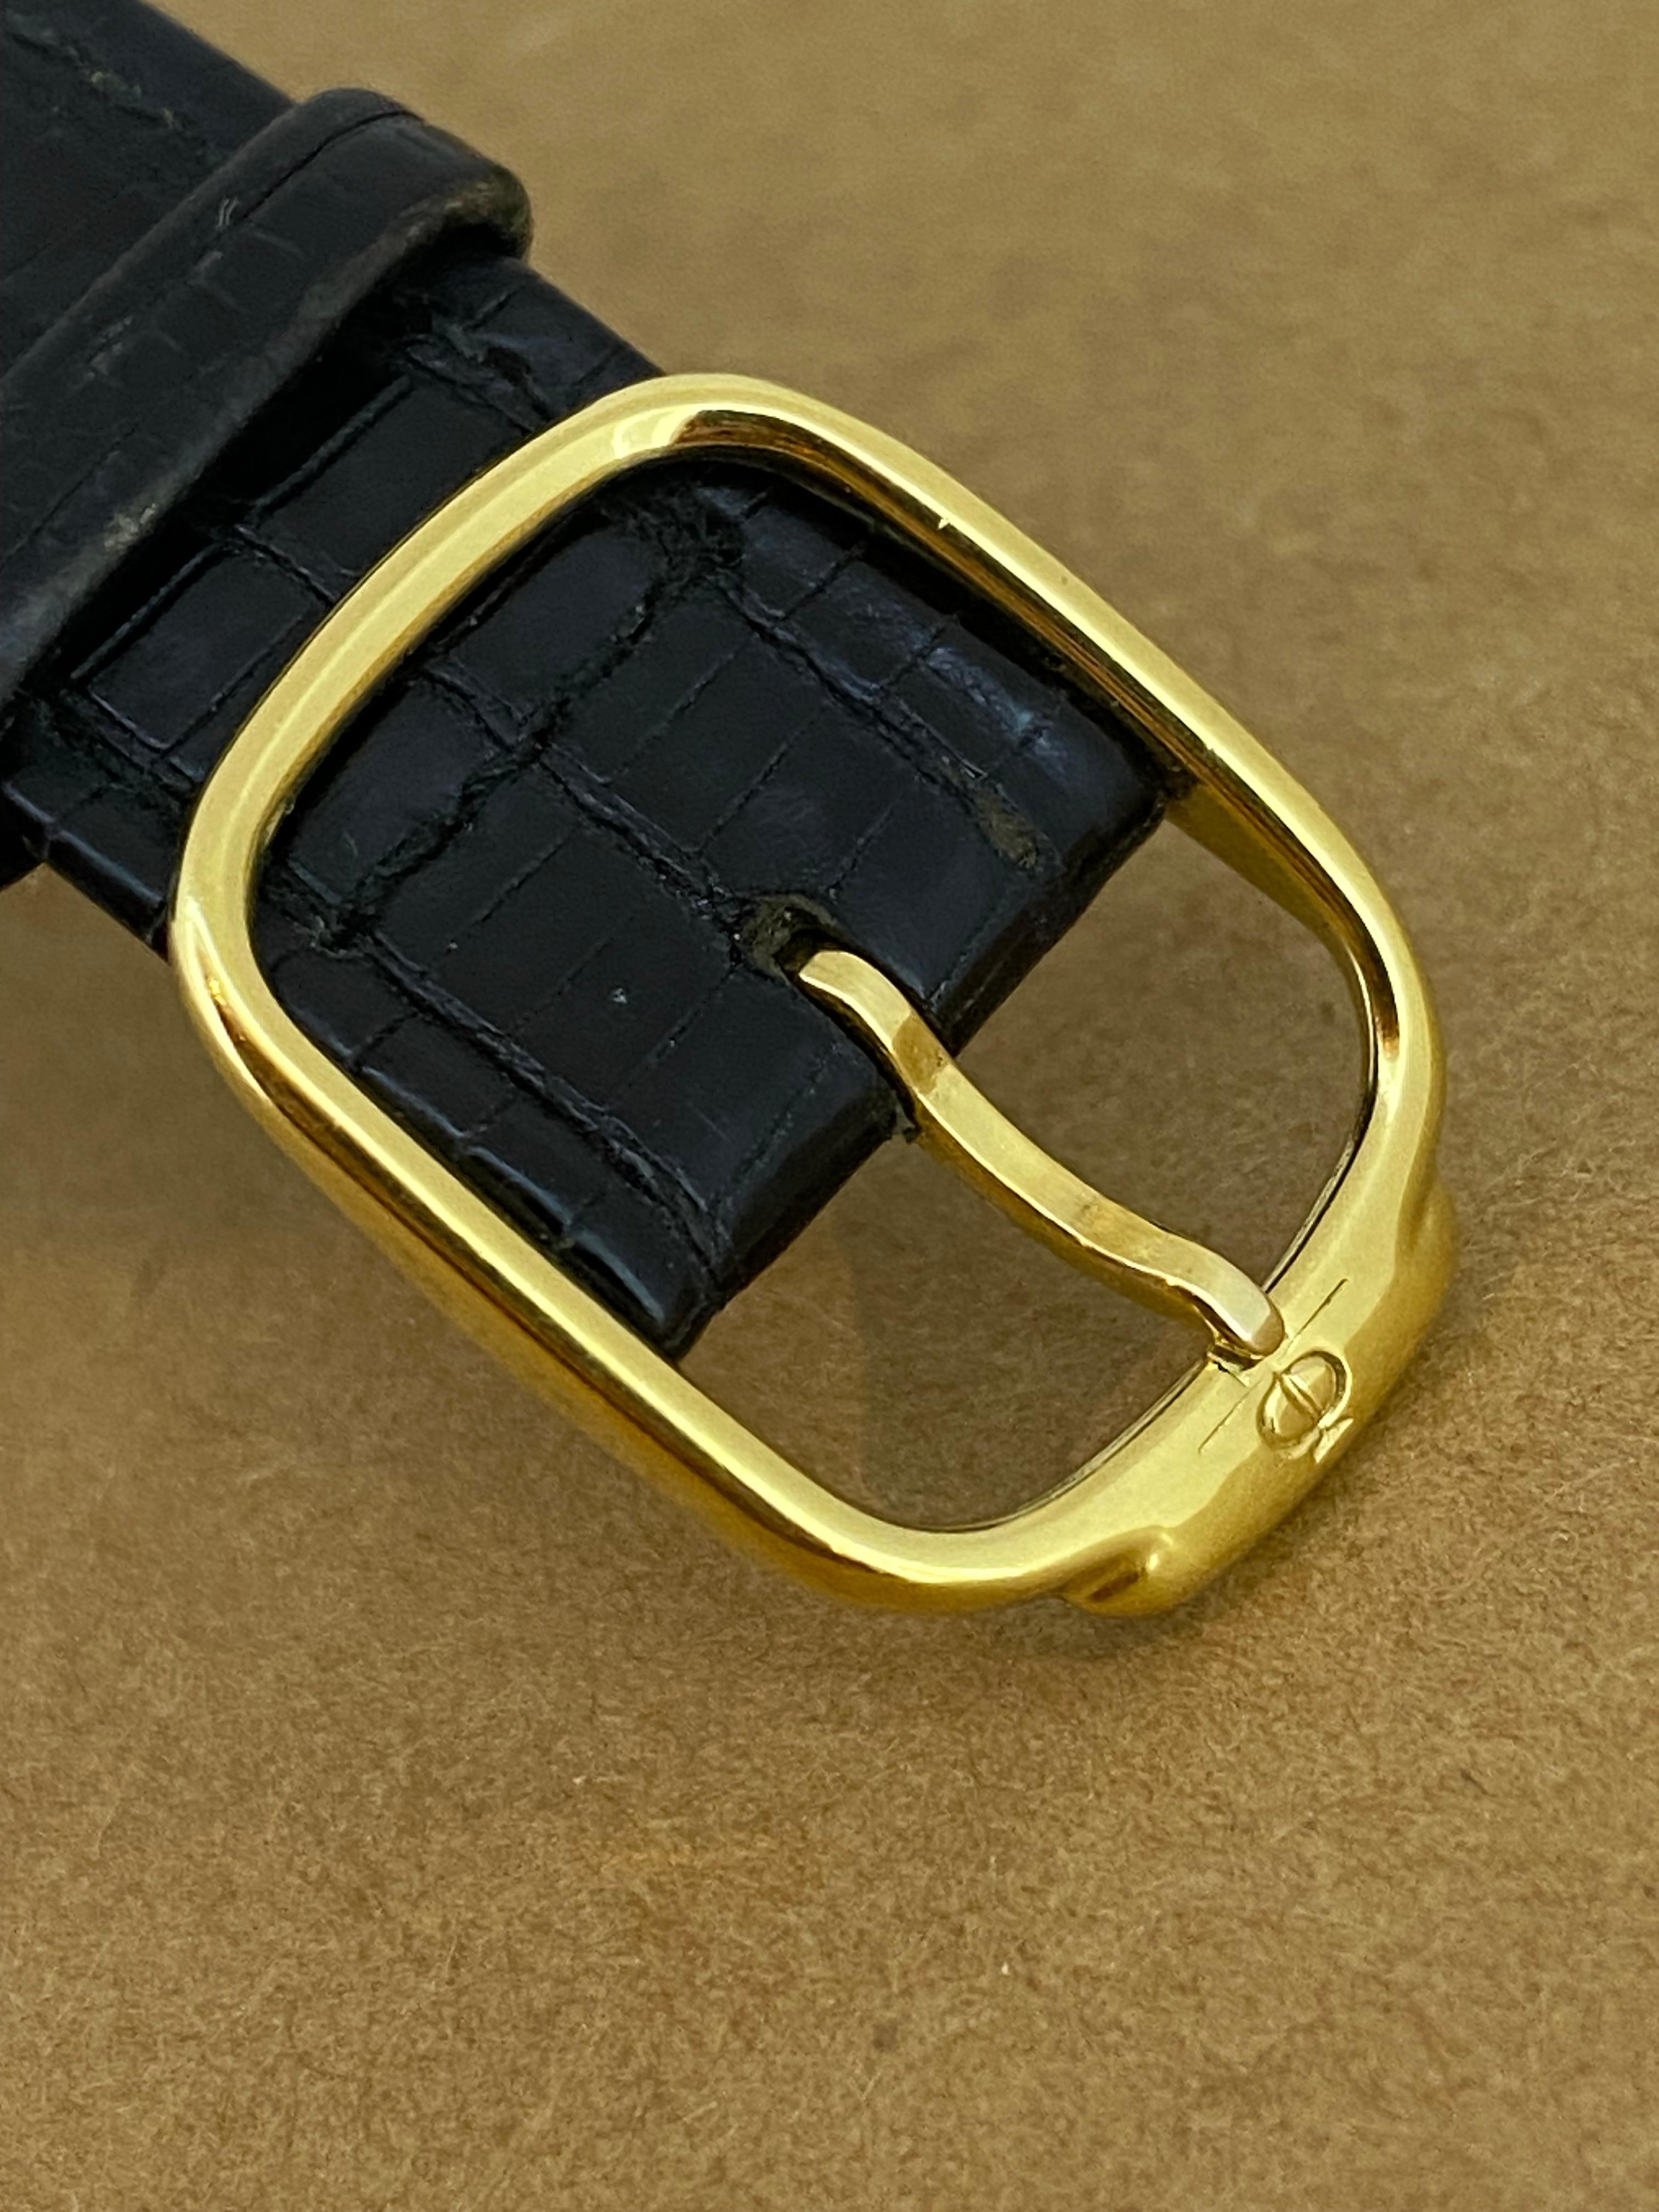 18K Yellow Gold Baume & Mercier Geneve ref 1830 Swiss Quartz Rectangle Watch For Sale 4